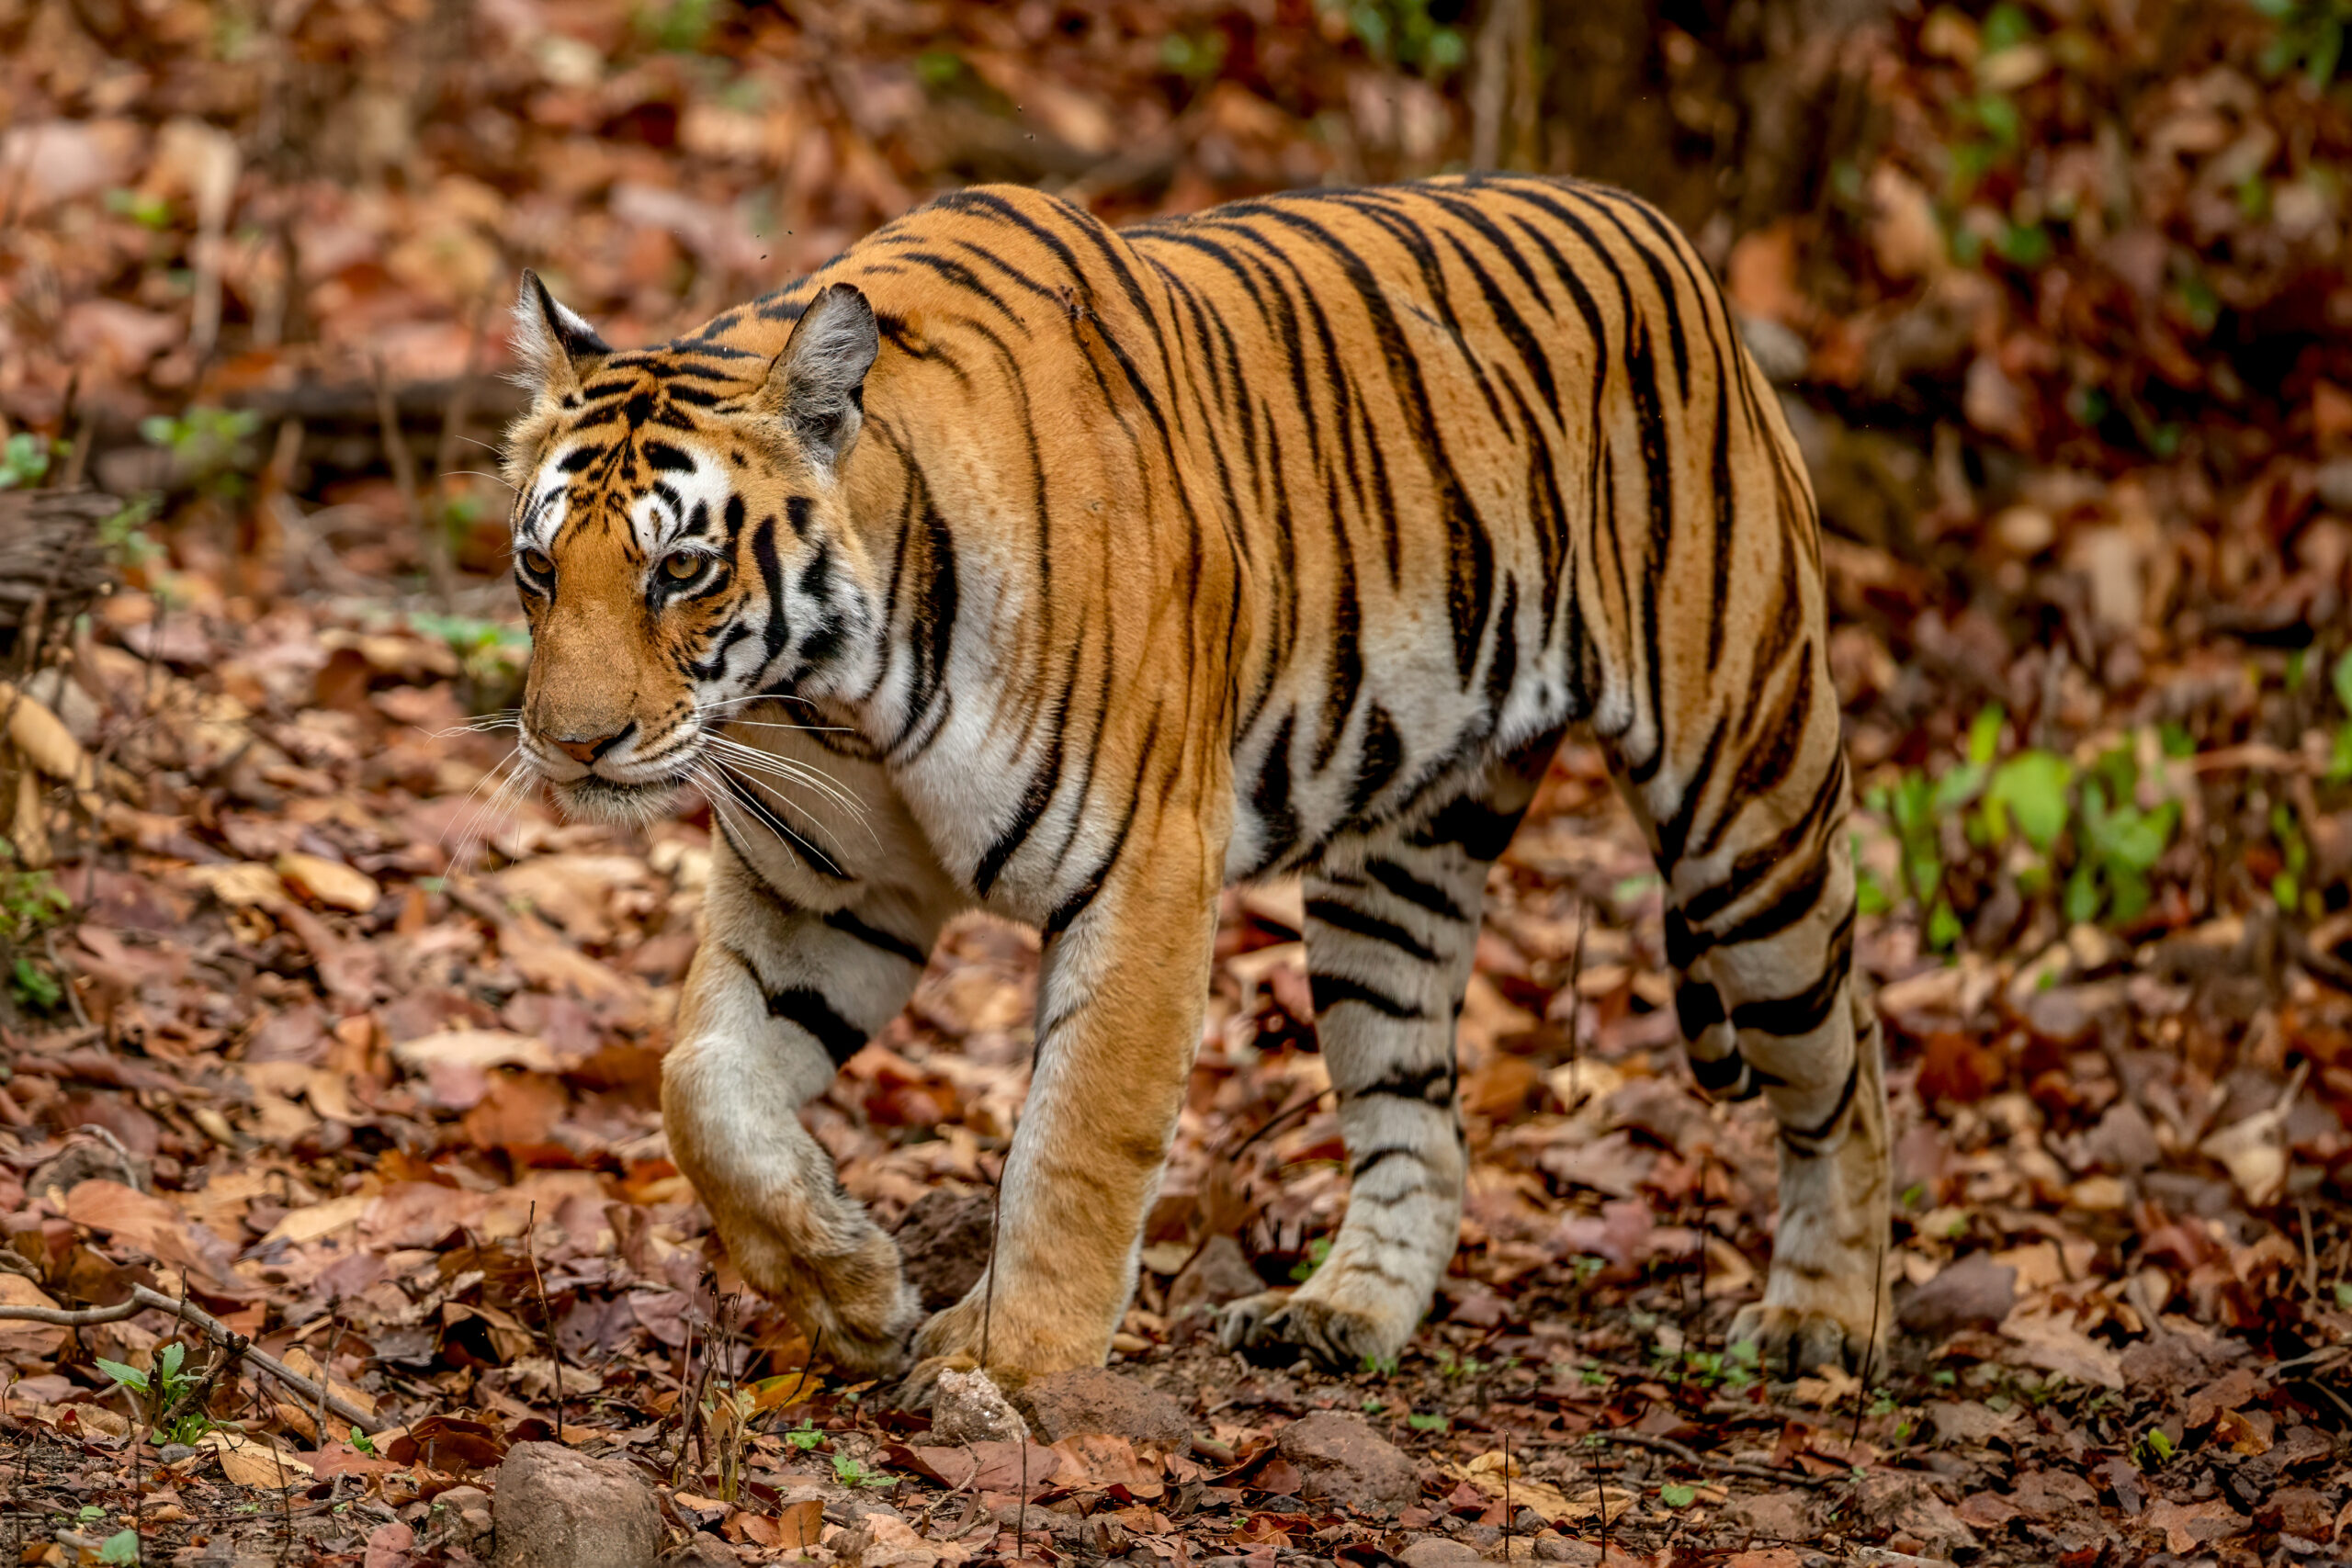 Tiger (Panthera tigris) @ Kanha National Park, India. Photo: Håvard Rosenlund